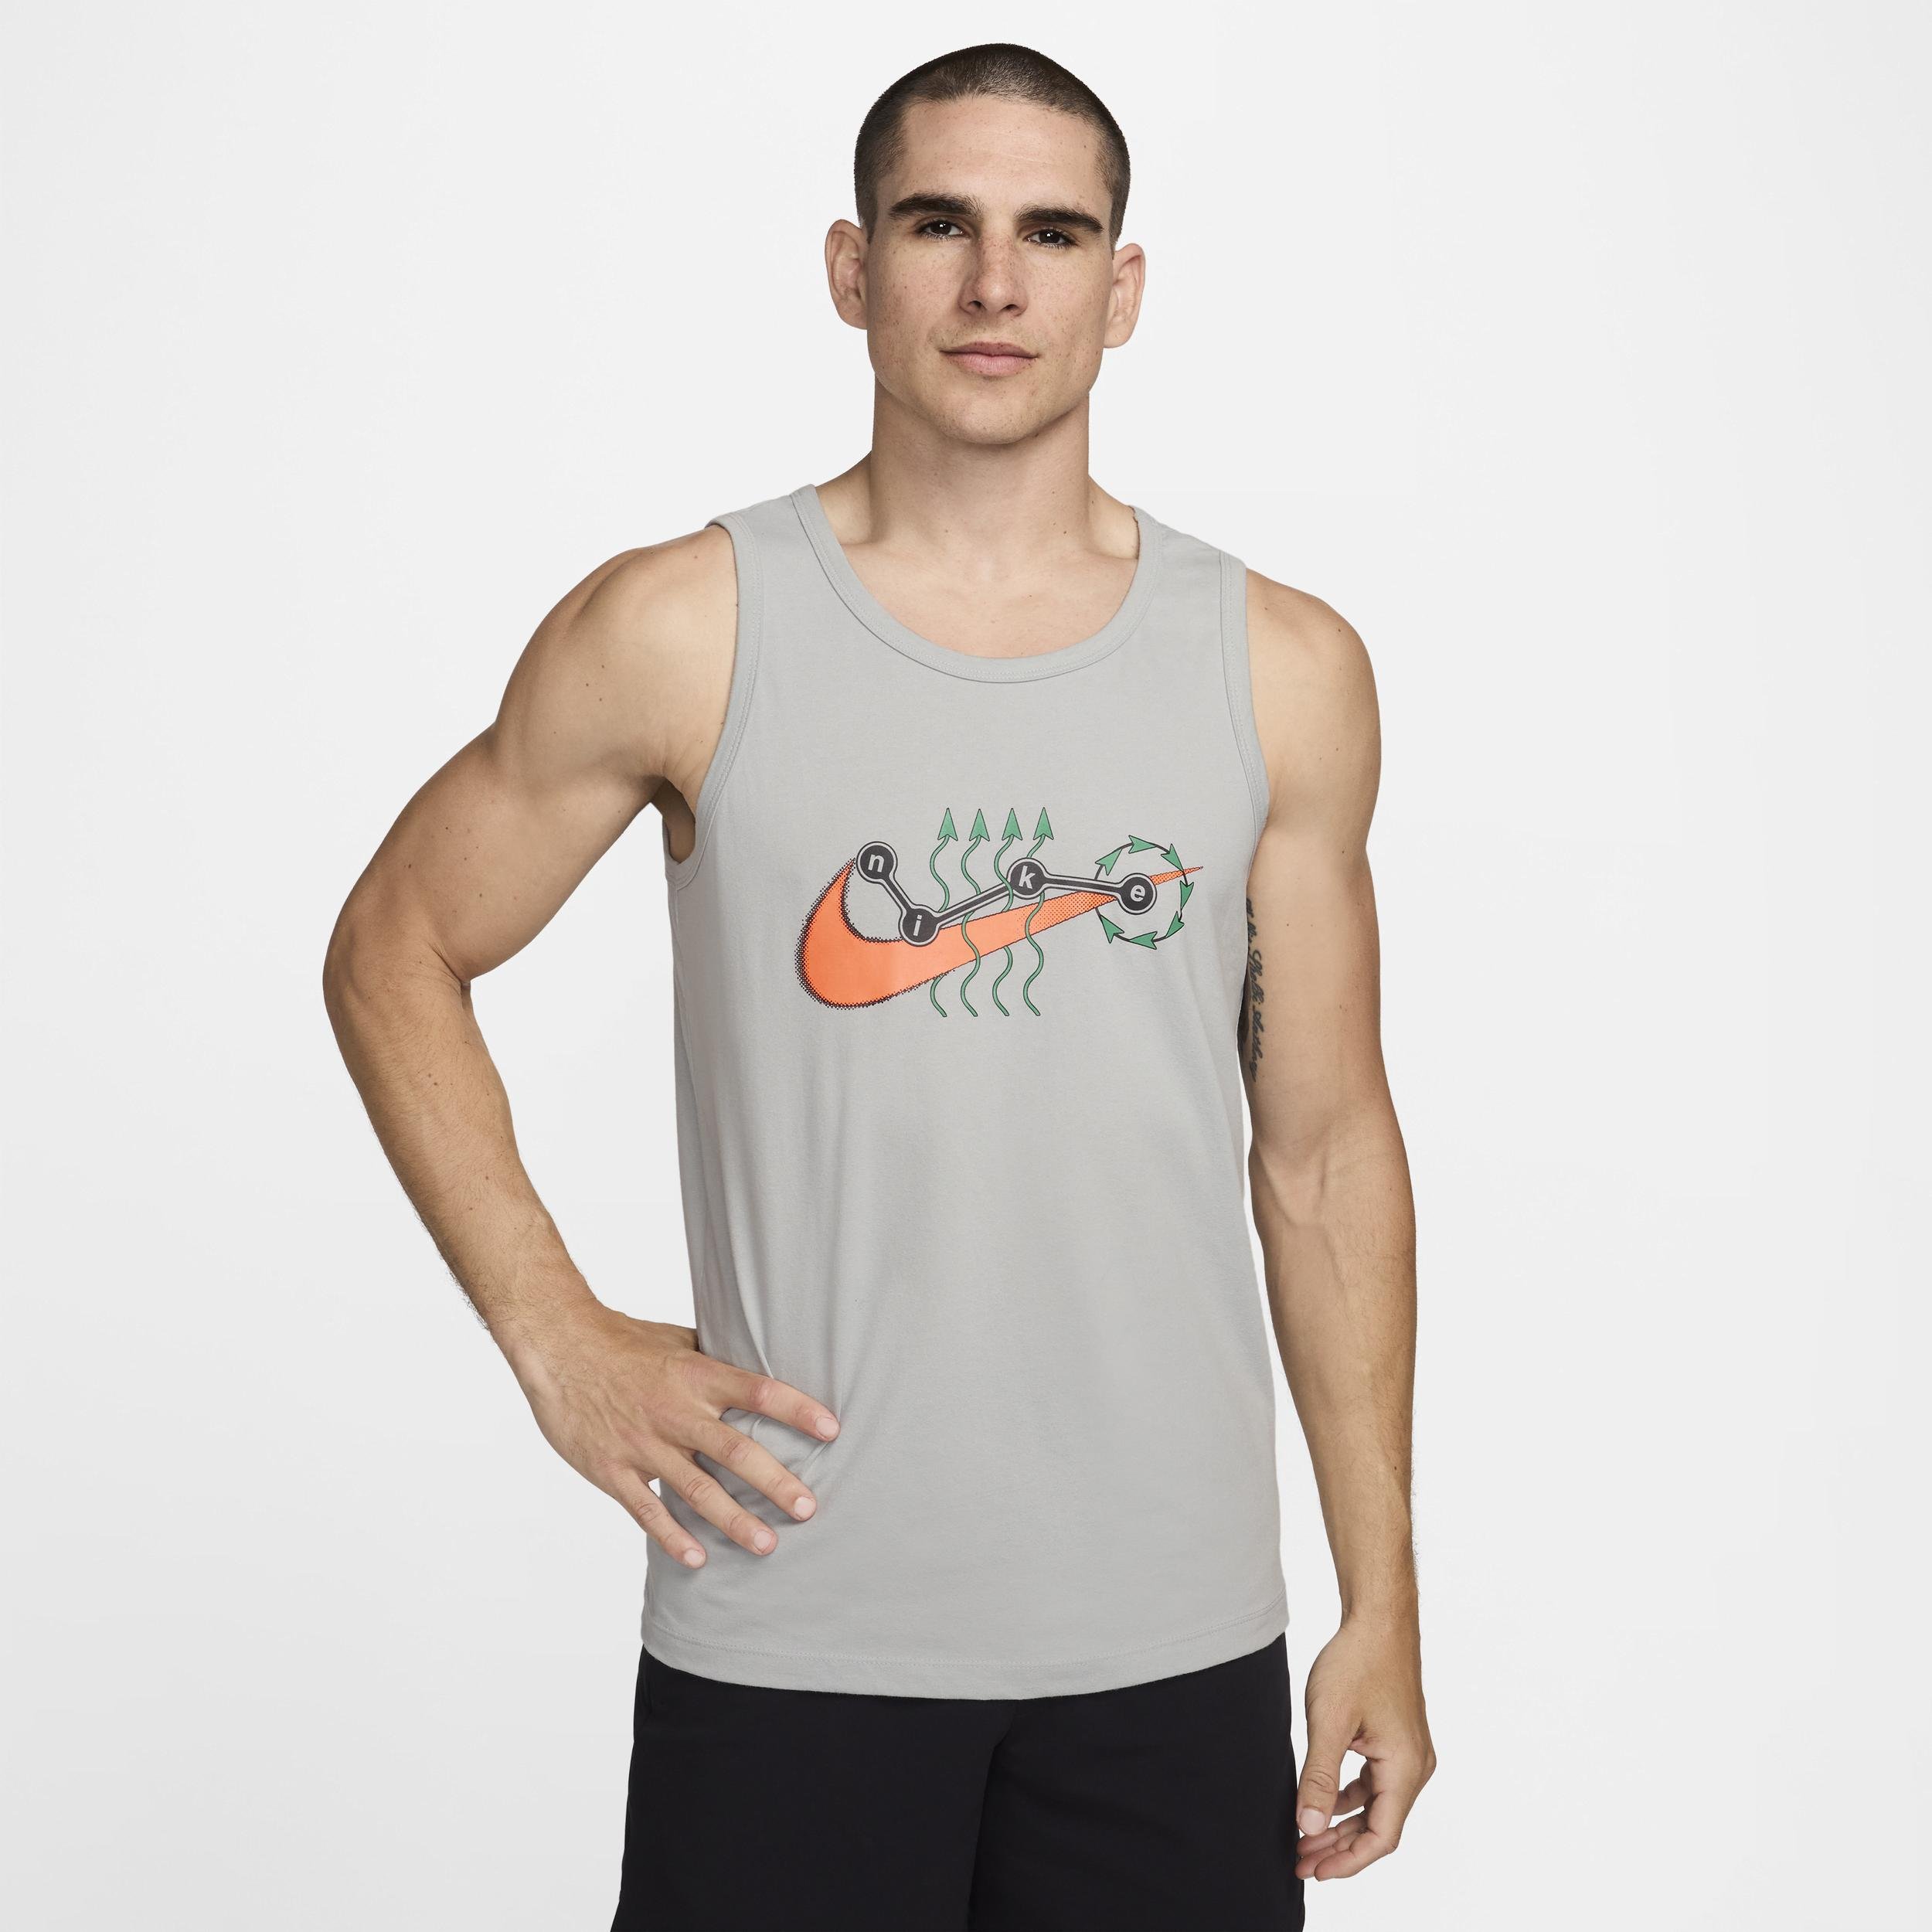 Nike Men's Dri-FIT Fitness Tank Top by NIKE